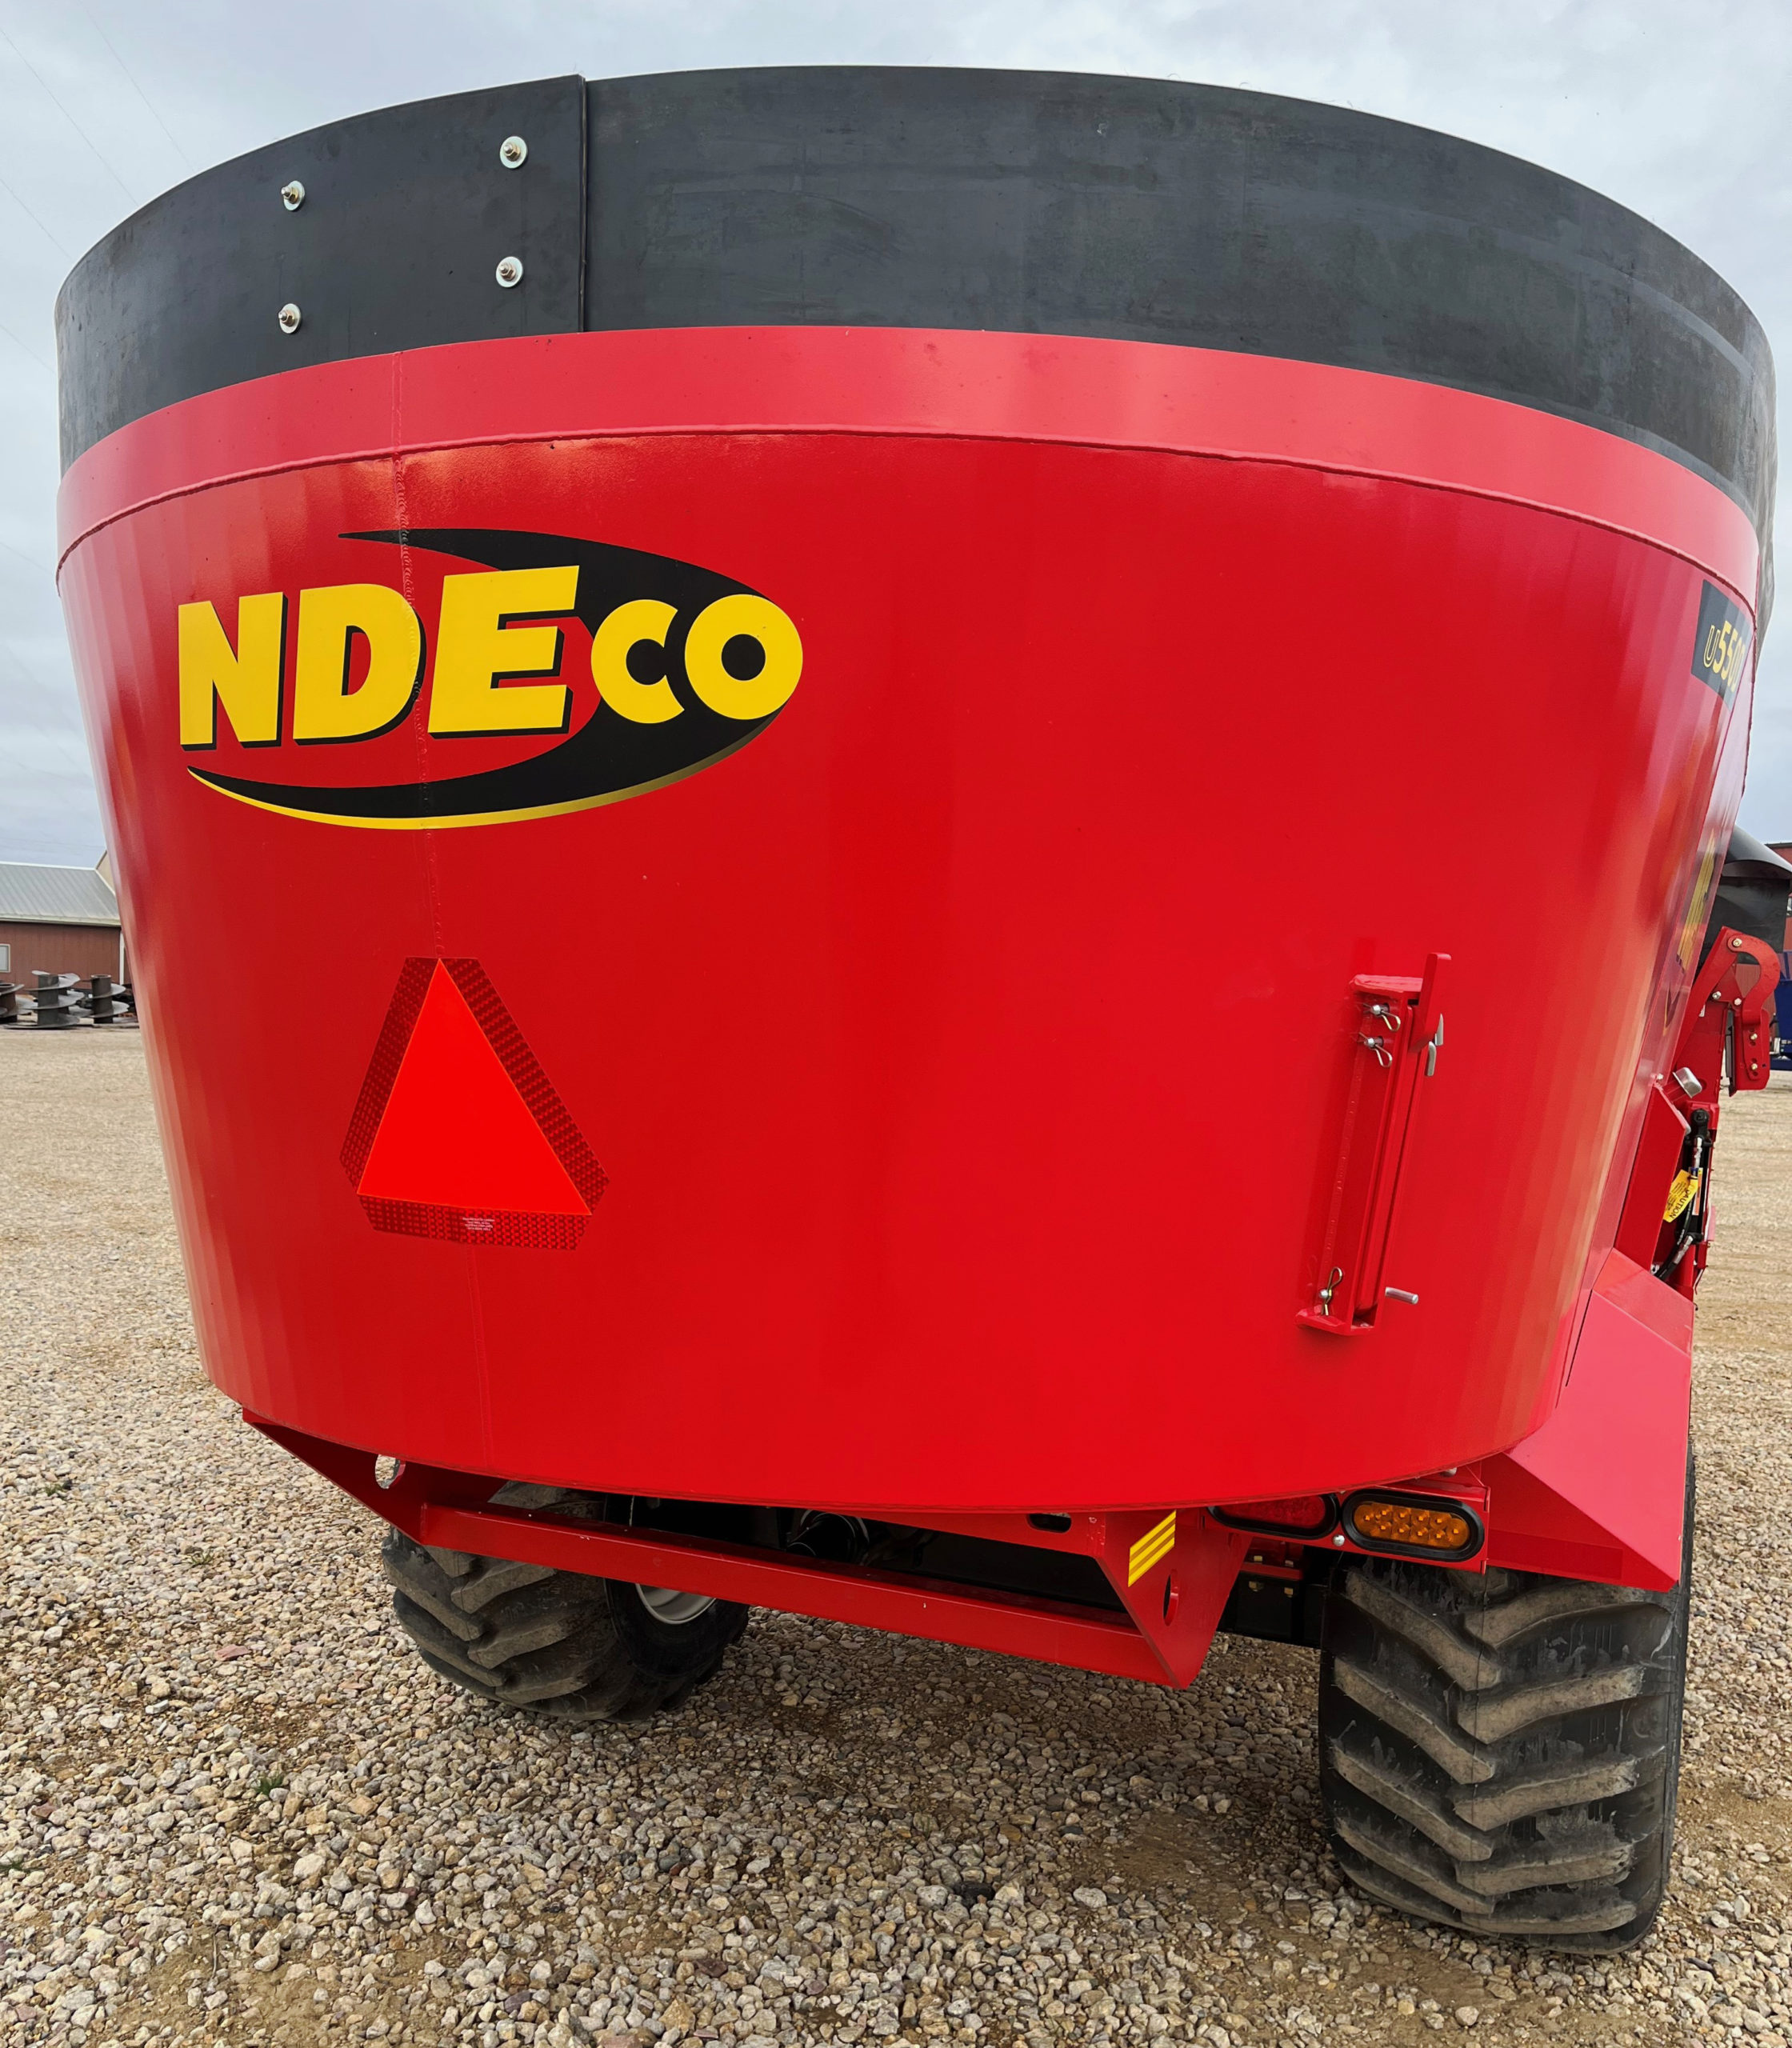 NDEco-U550D-Vertical-Mixer-Wagon